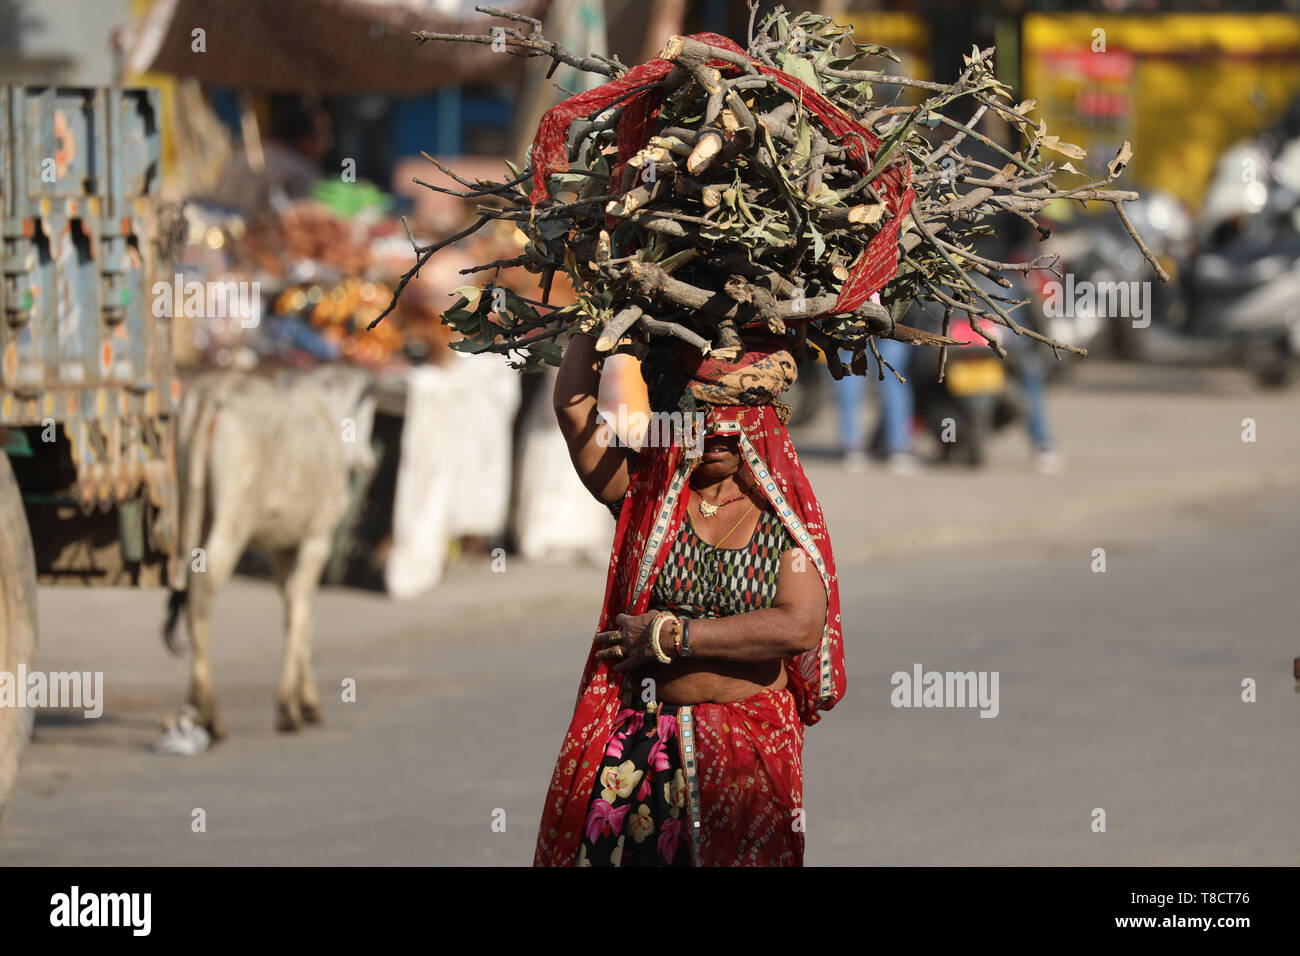 Indian Woman balancing Firewood on Head Stock Photo